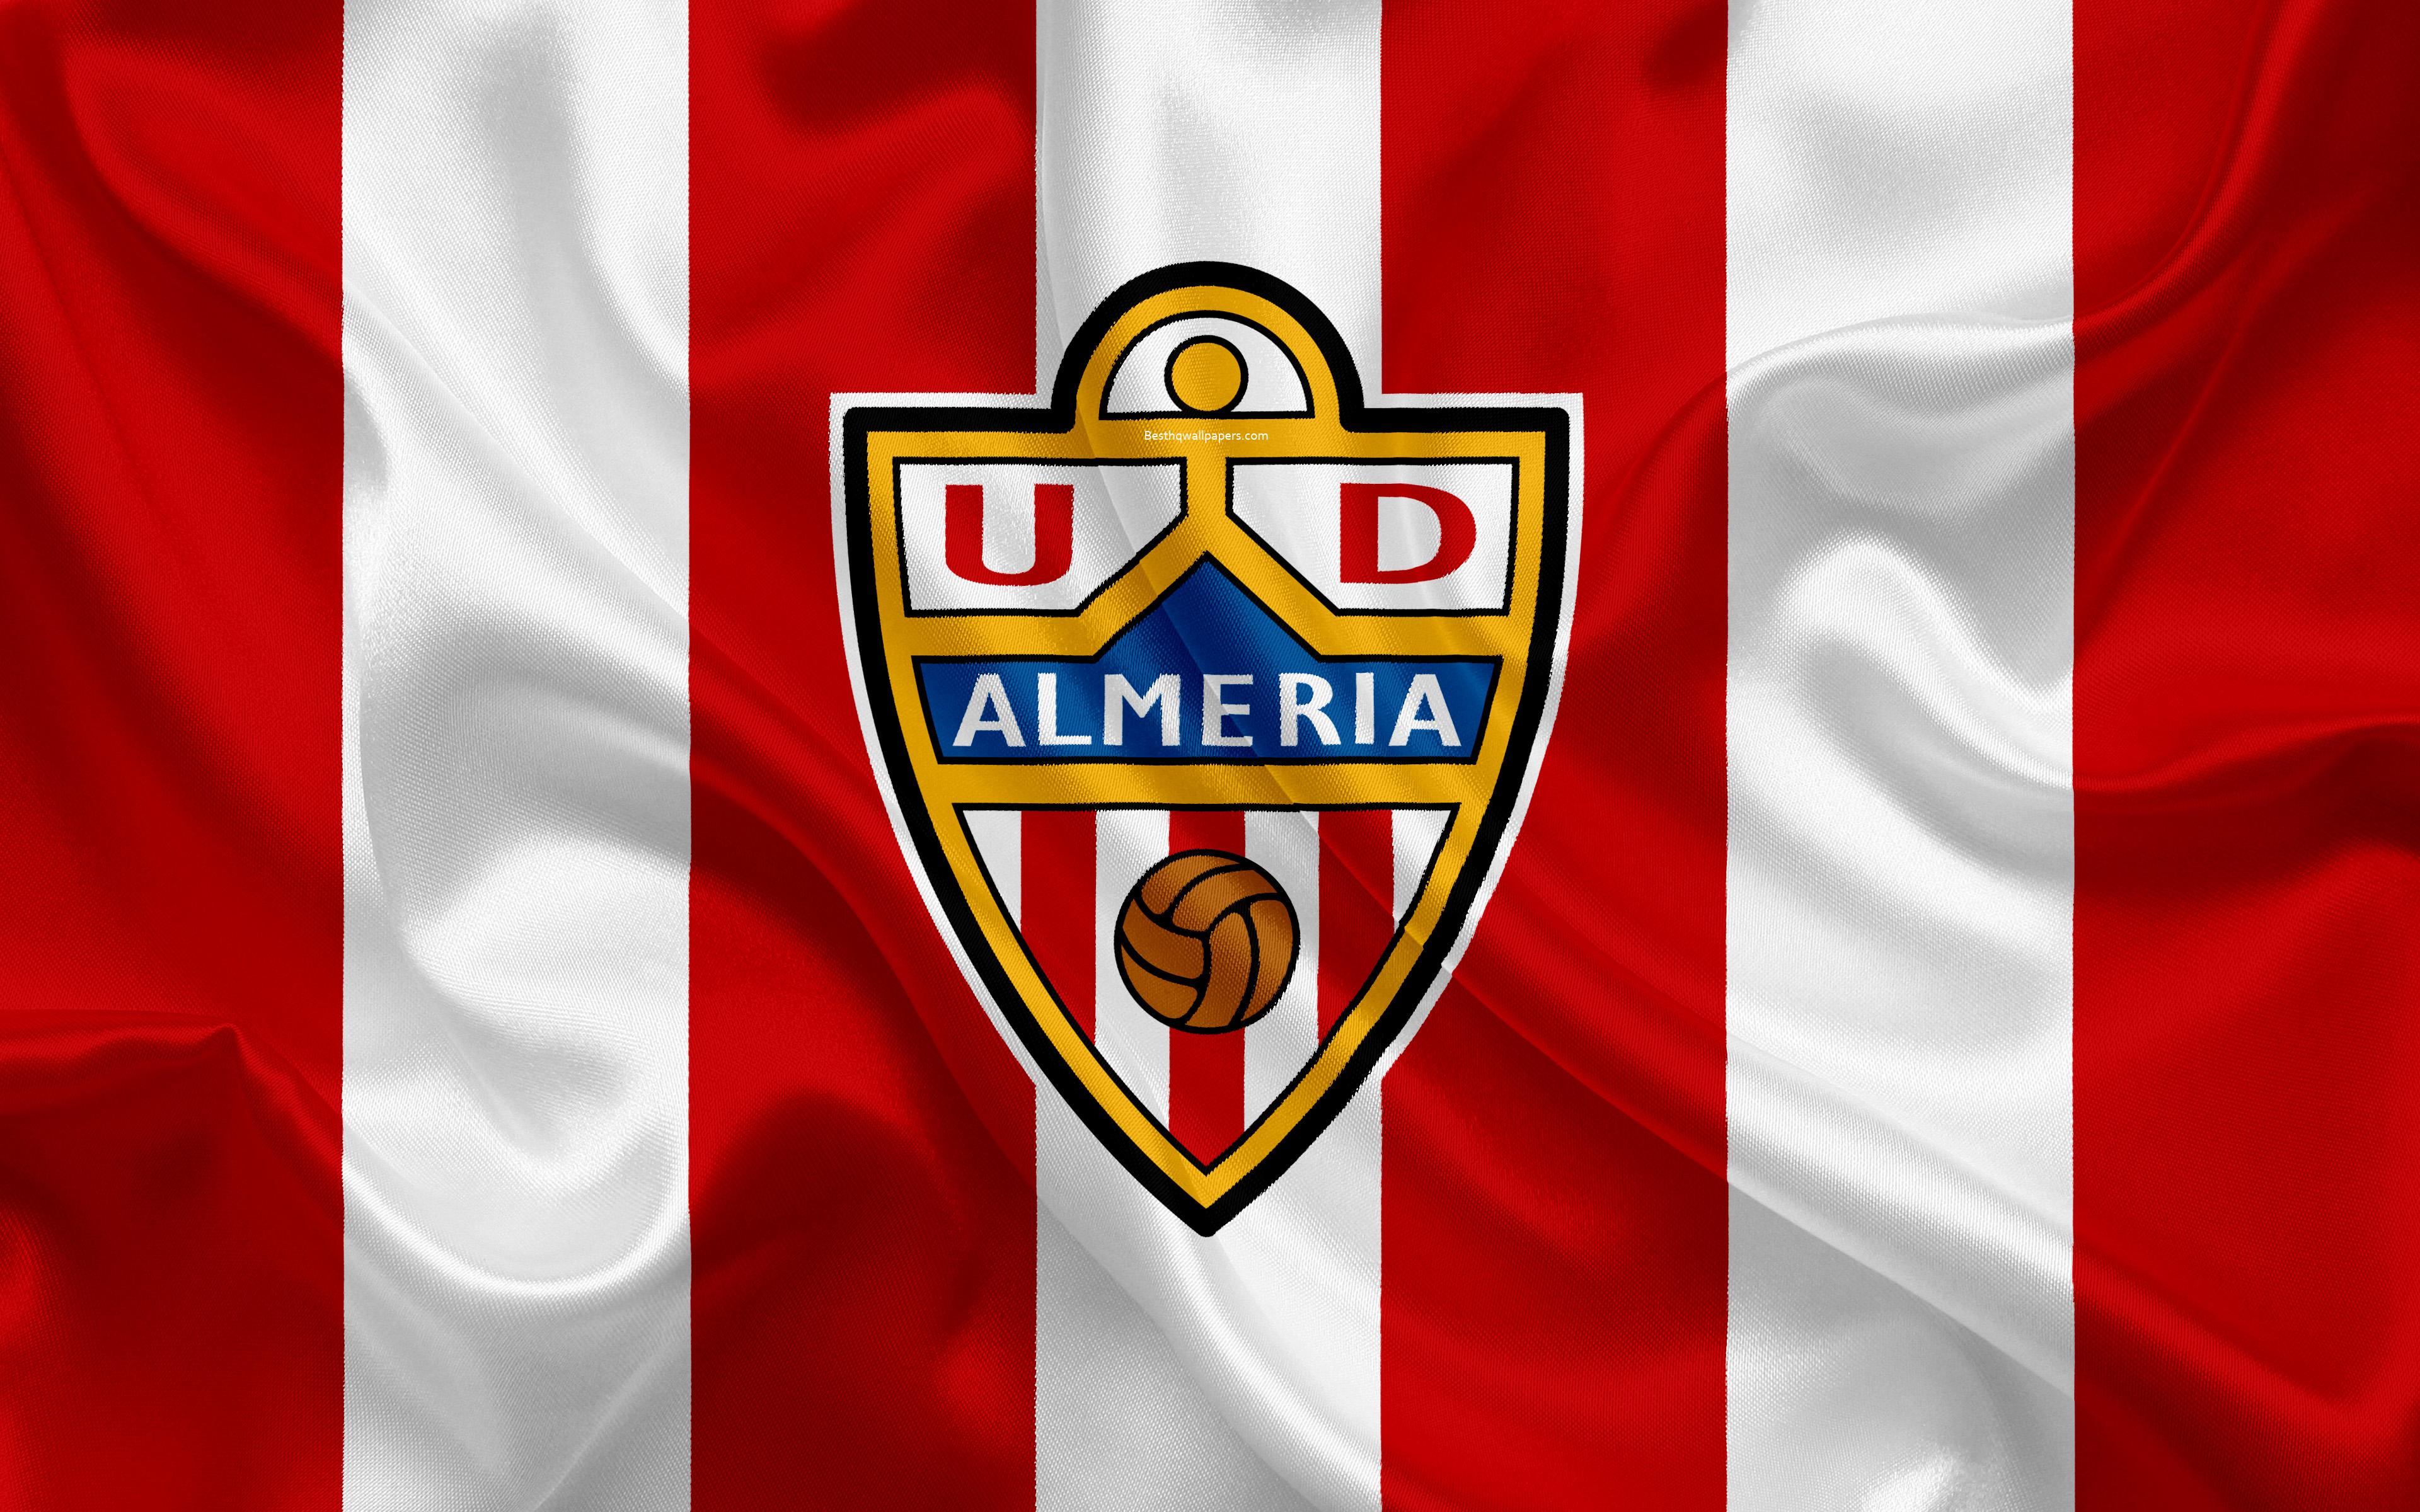 Download wallpaper UD Almeria, 4k, silk texture, Spanish football